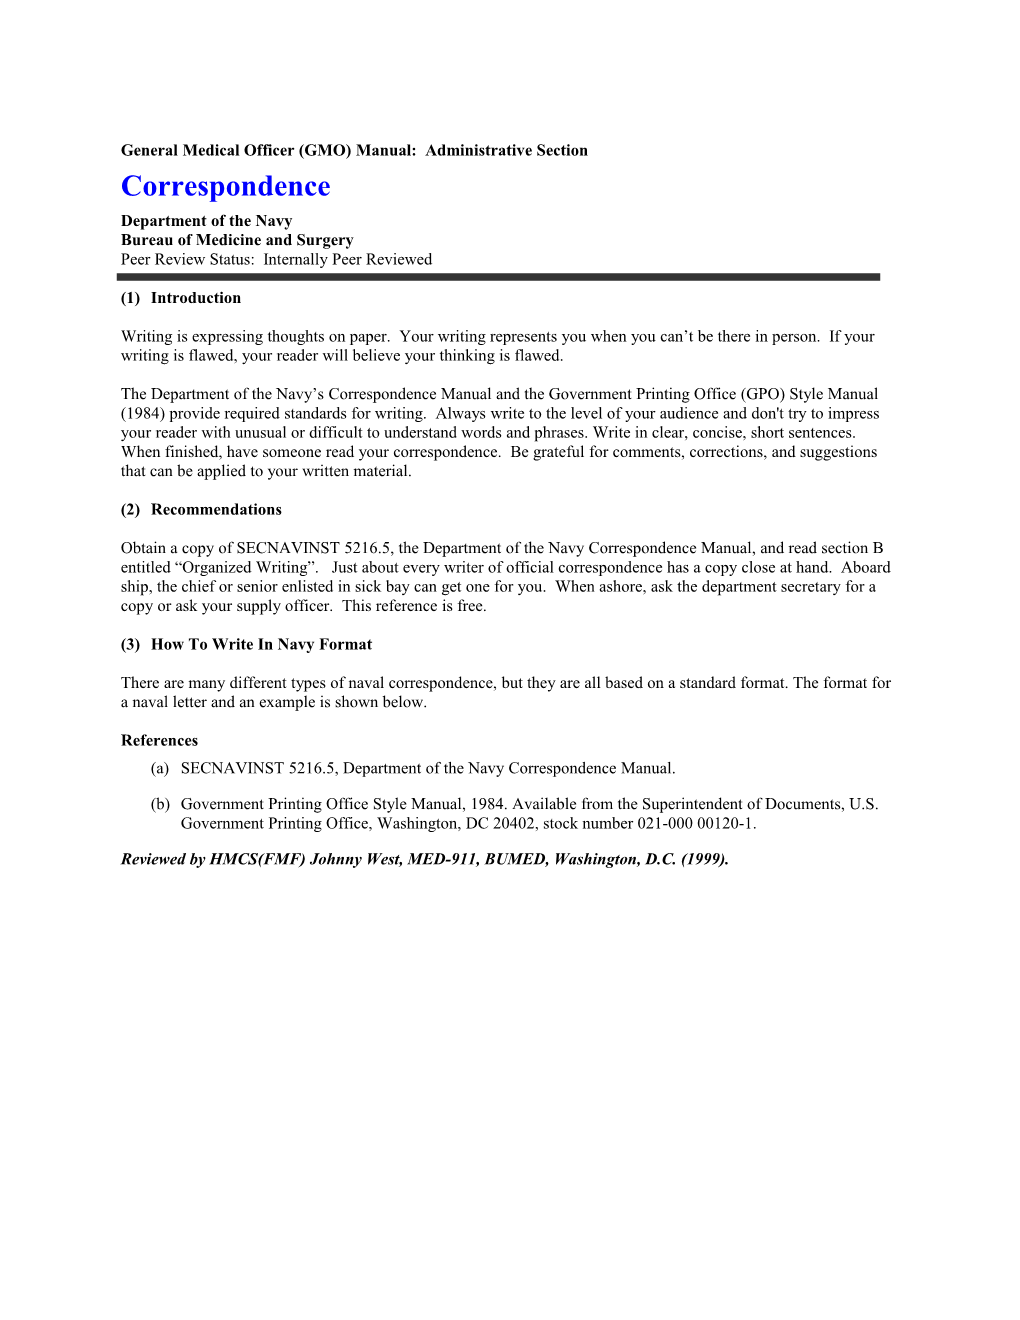 General Medical Officer (GMO) Manual: Correspondence